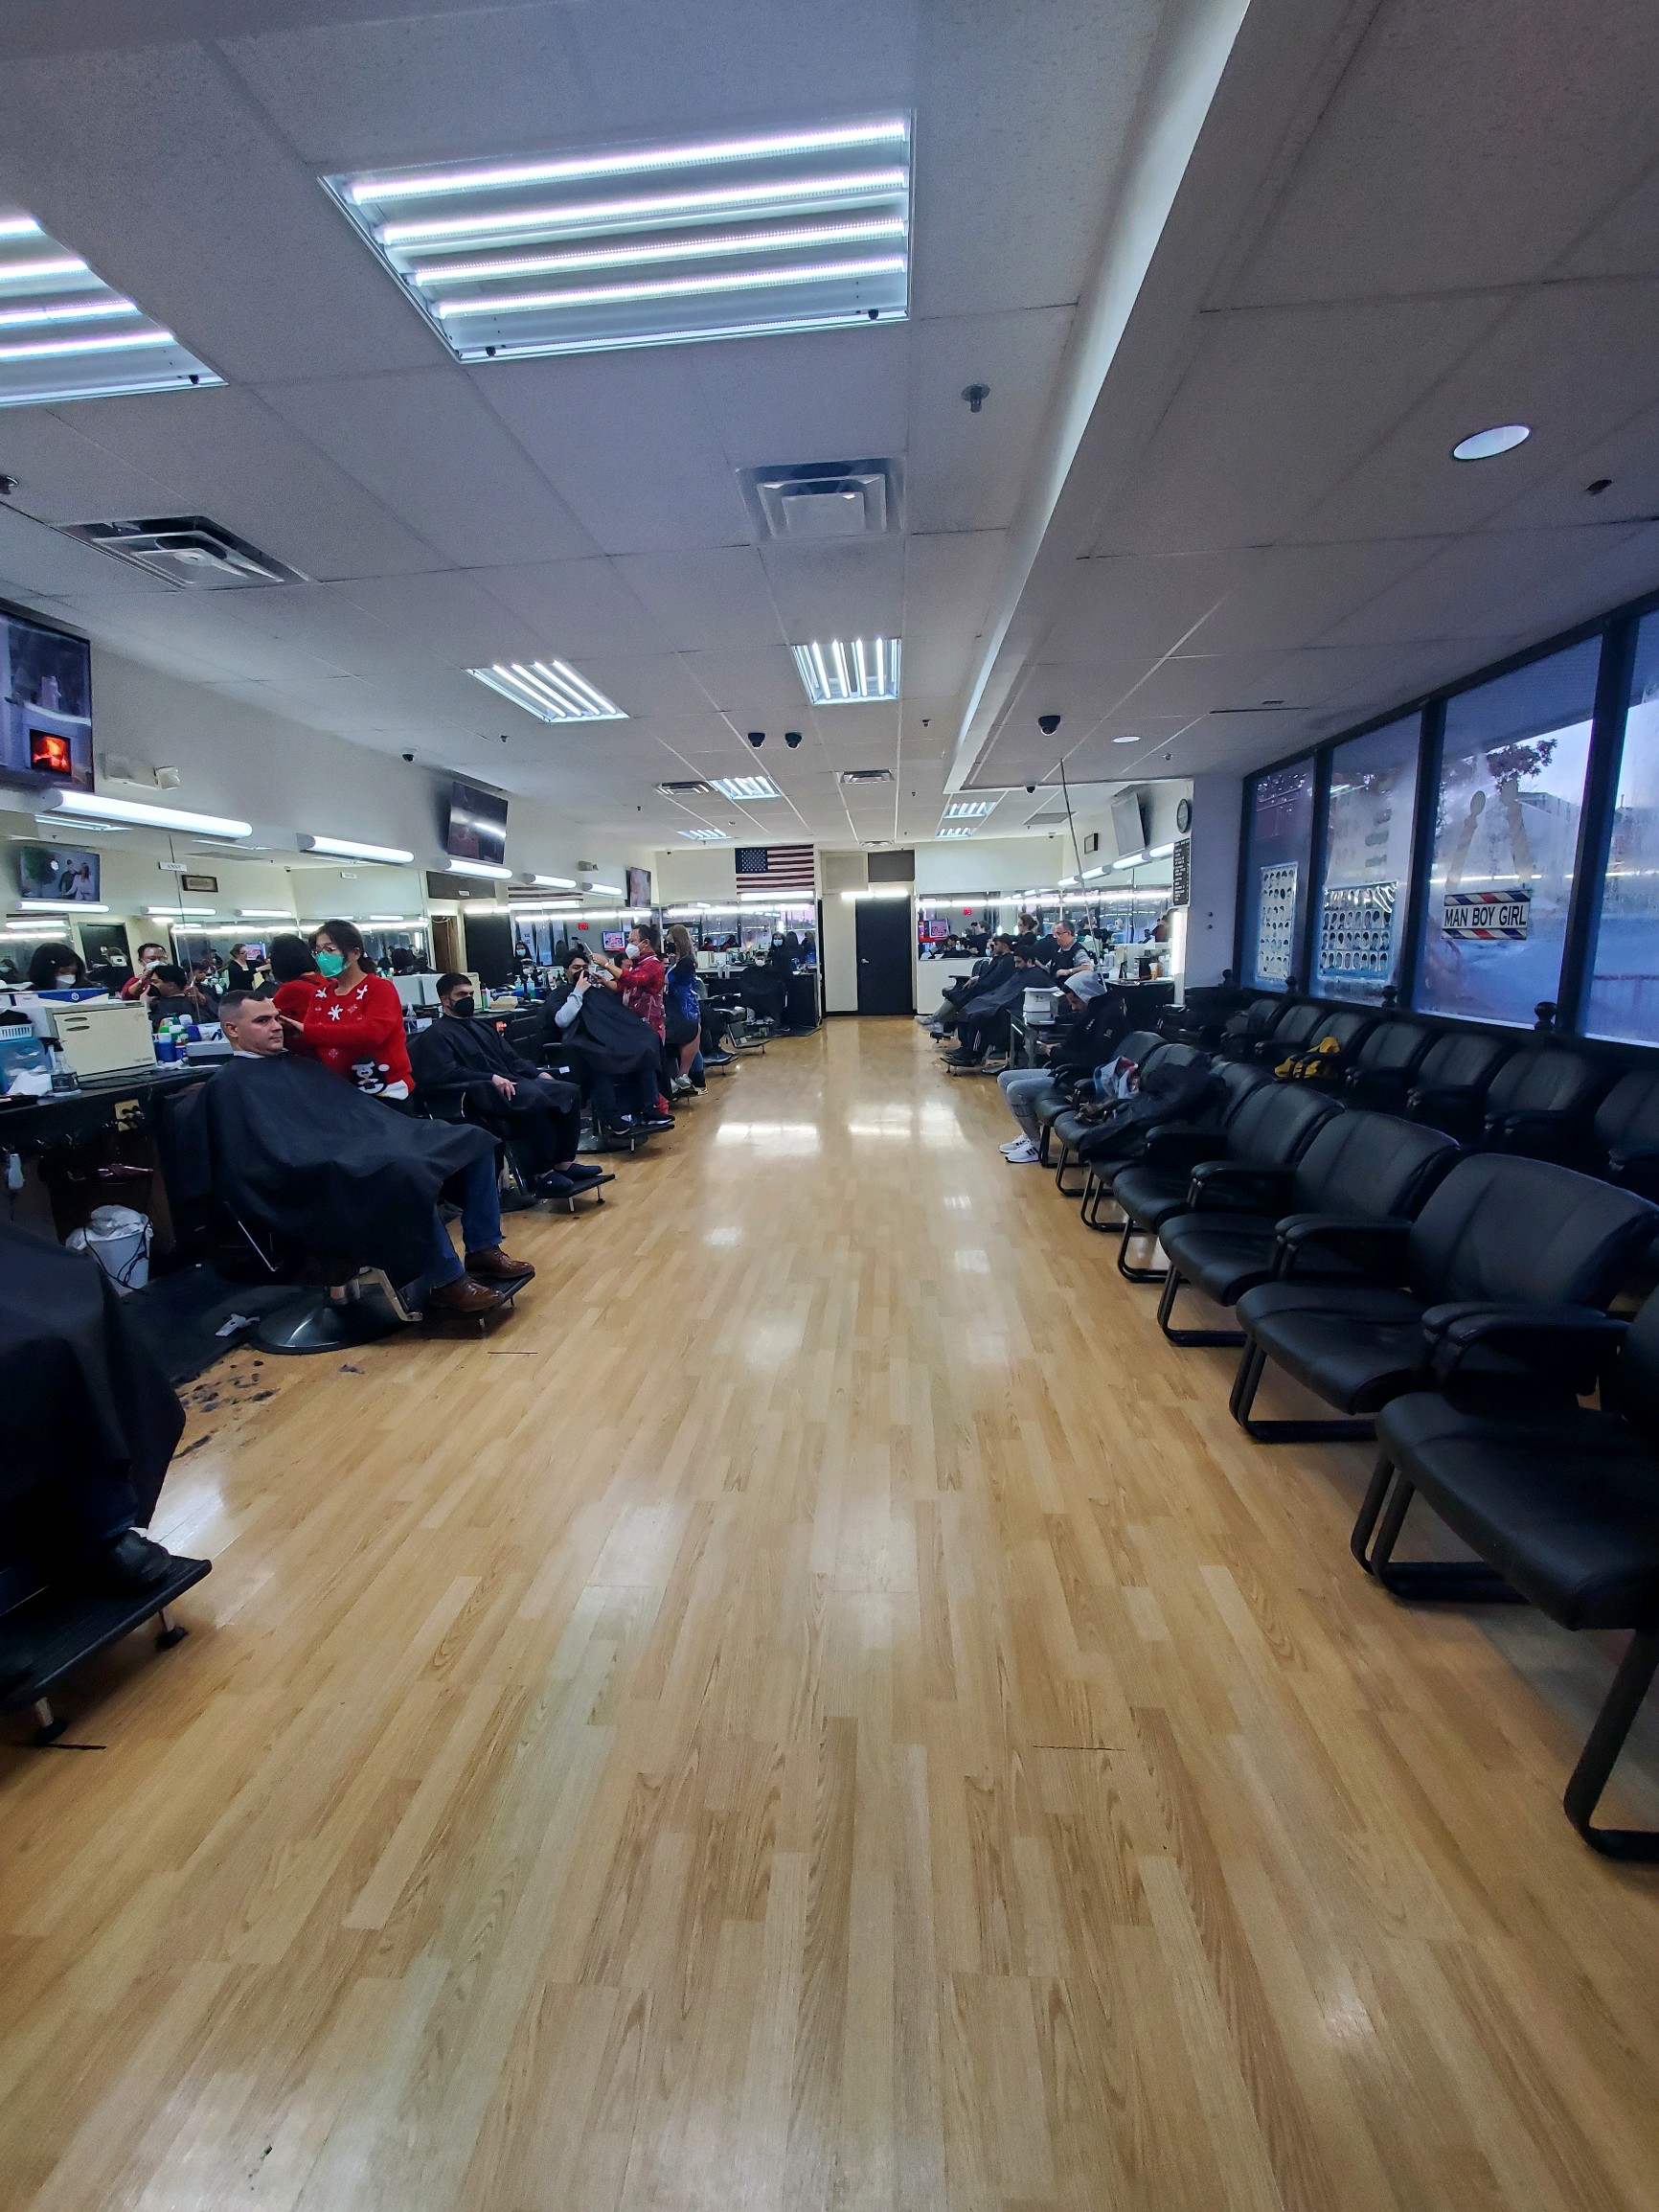  Inside the Barbershop2 